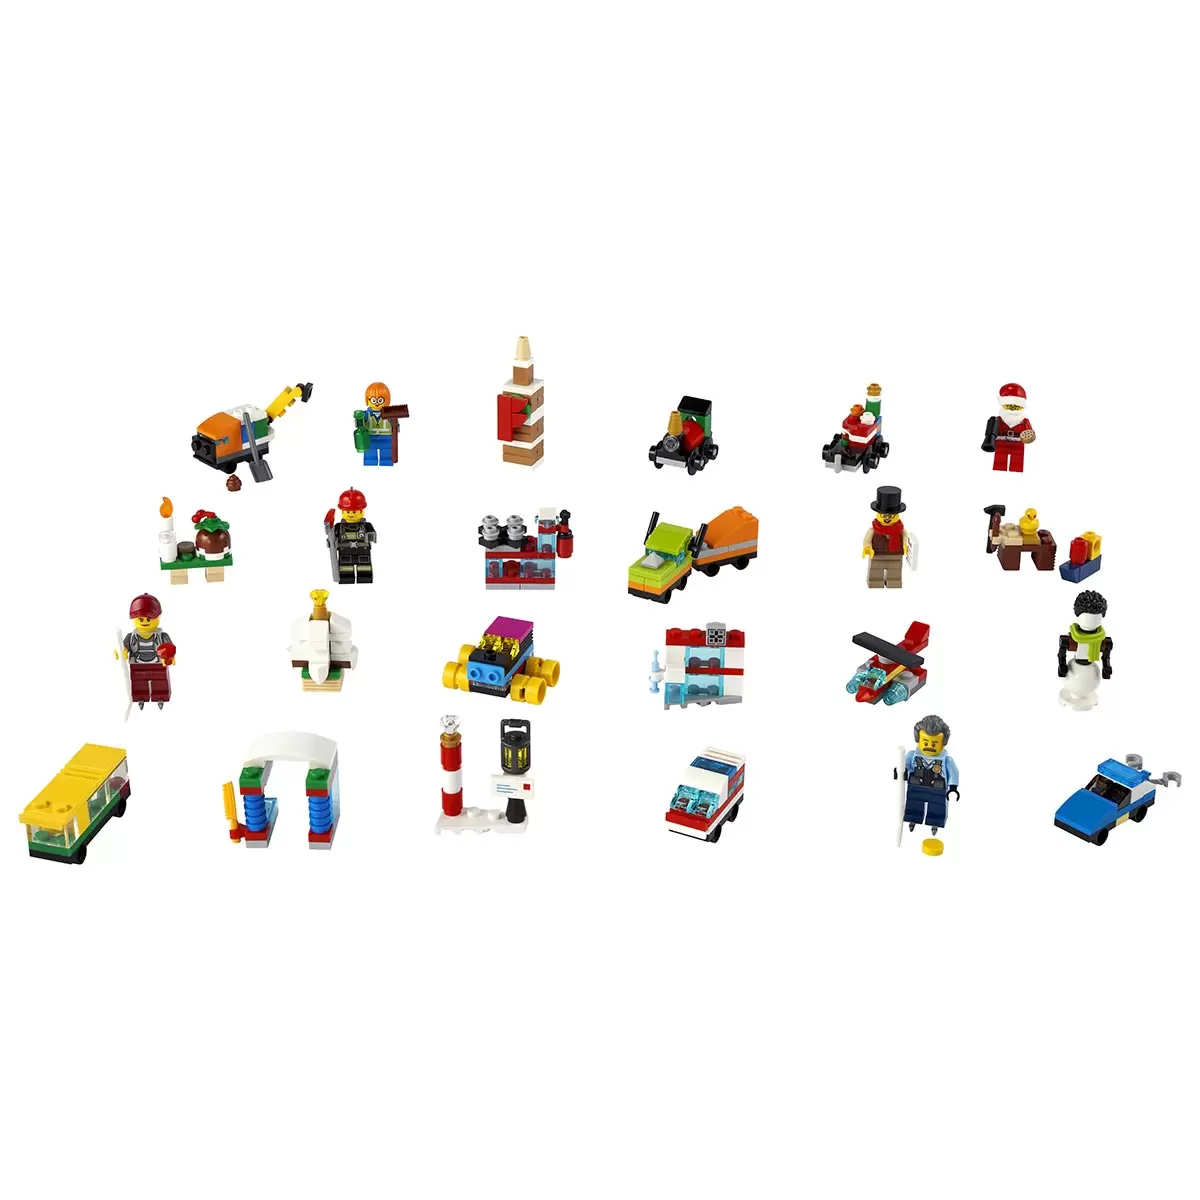 Buy LEGO City Advent Calendar Items Image at Costco.co.uk